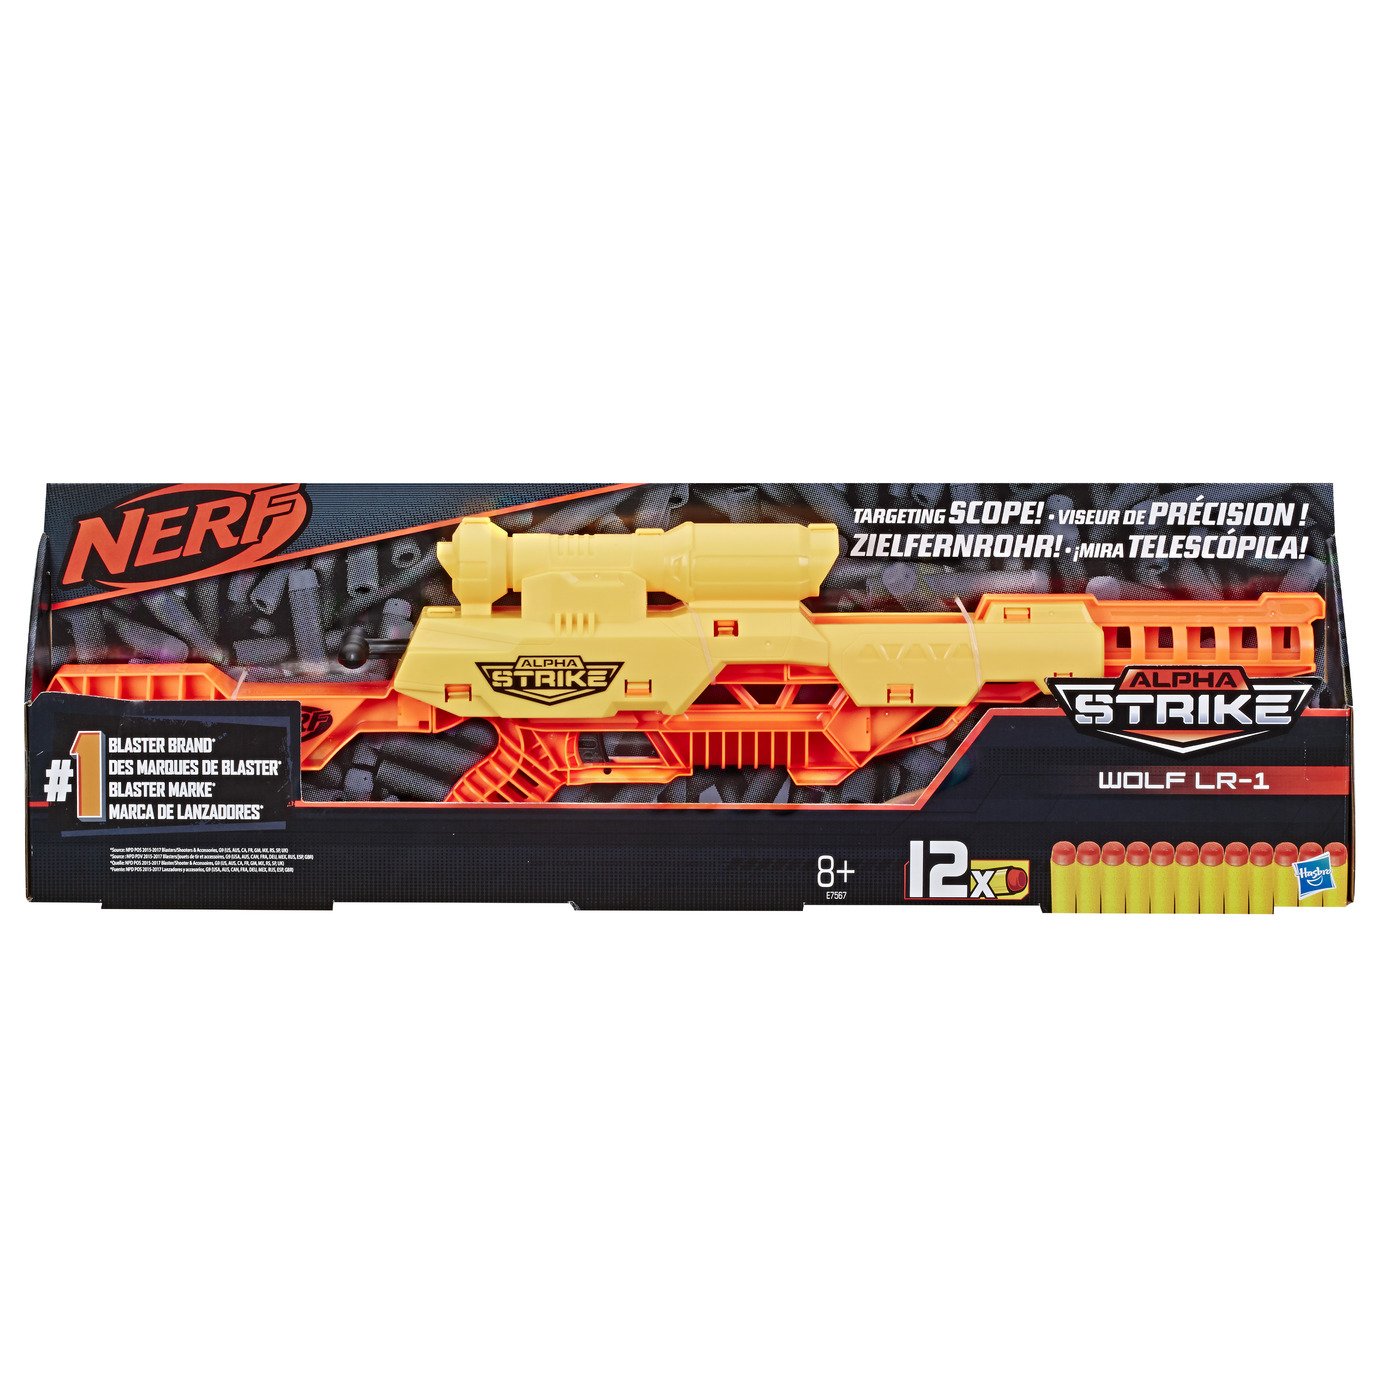 Wolf LR-1 Nerf Alpha Strike Toy Blaster Review